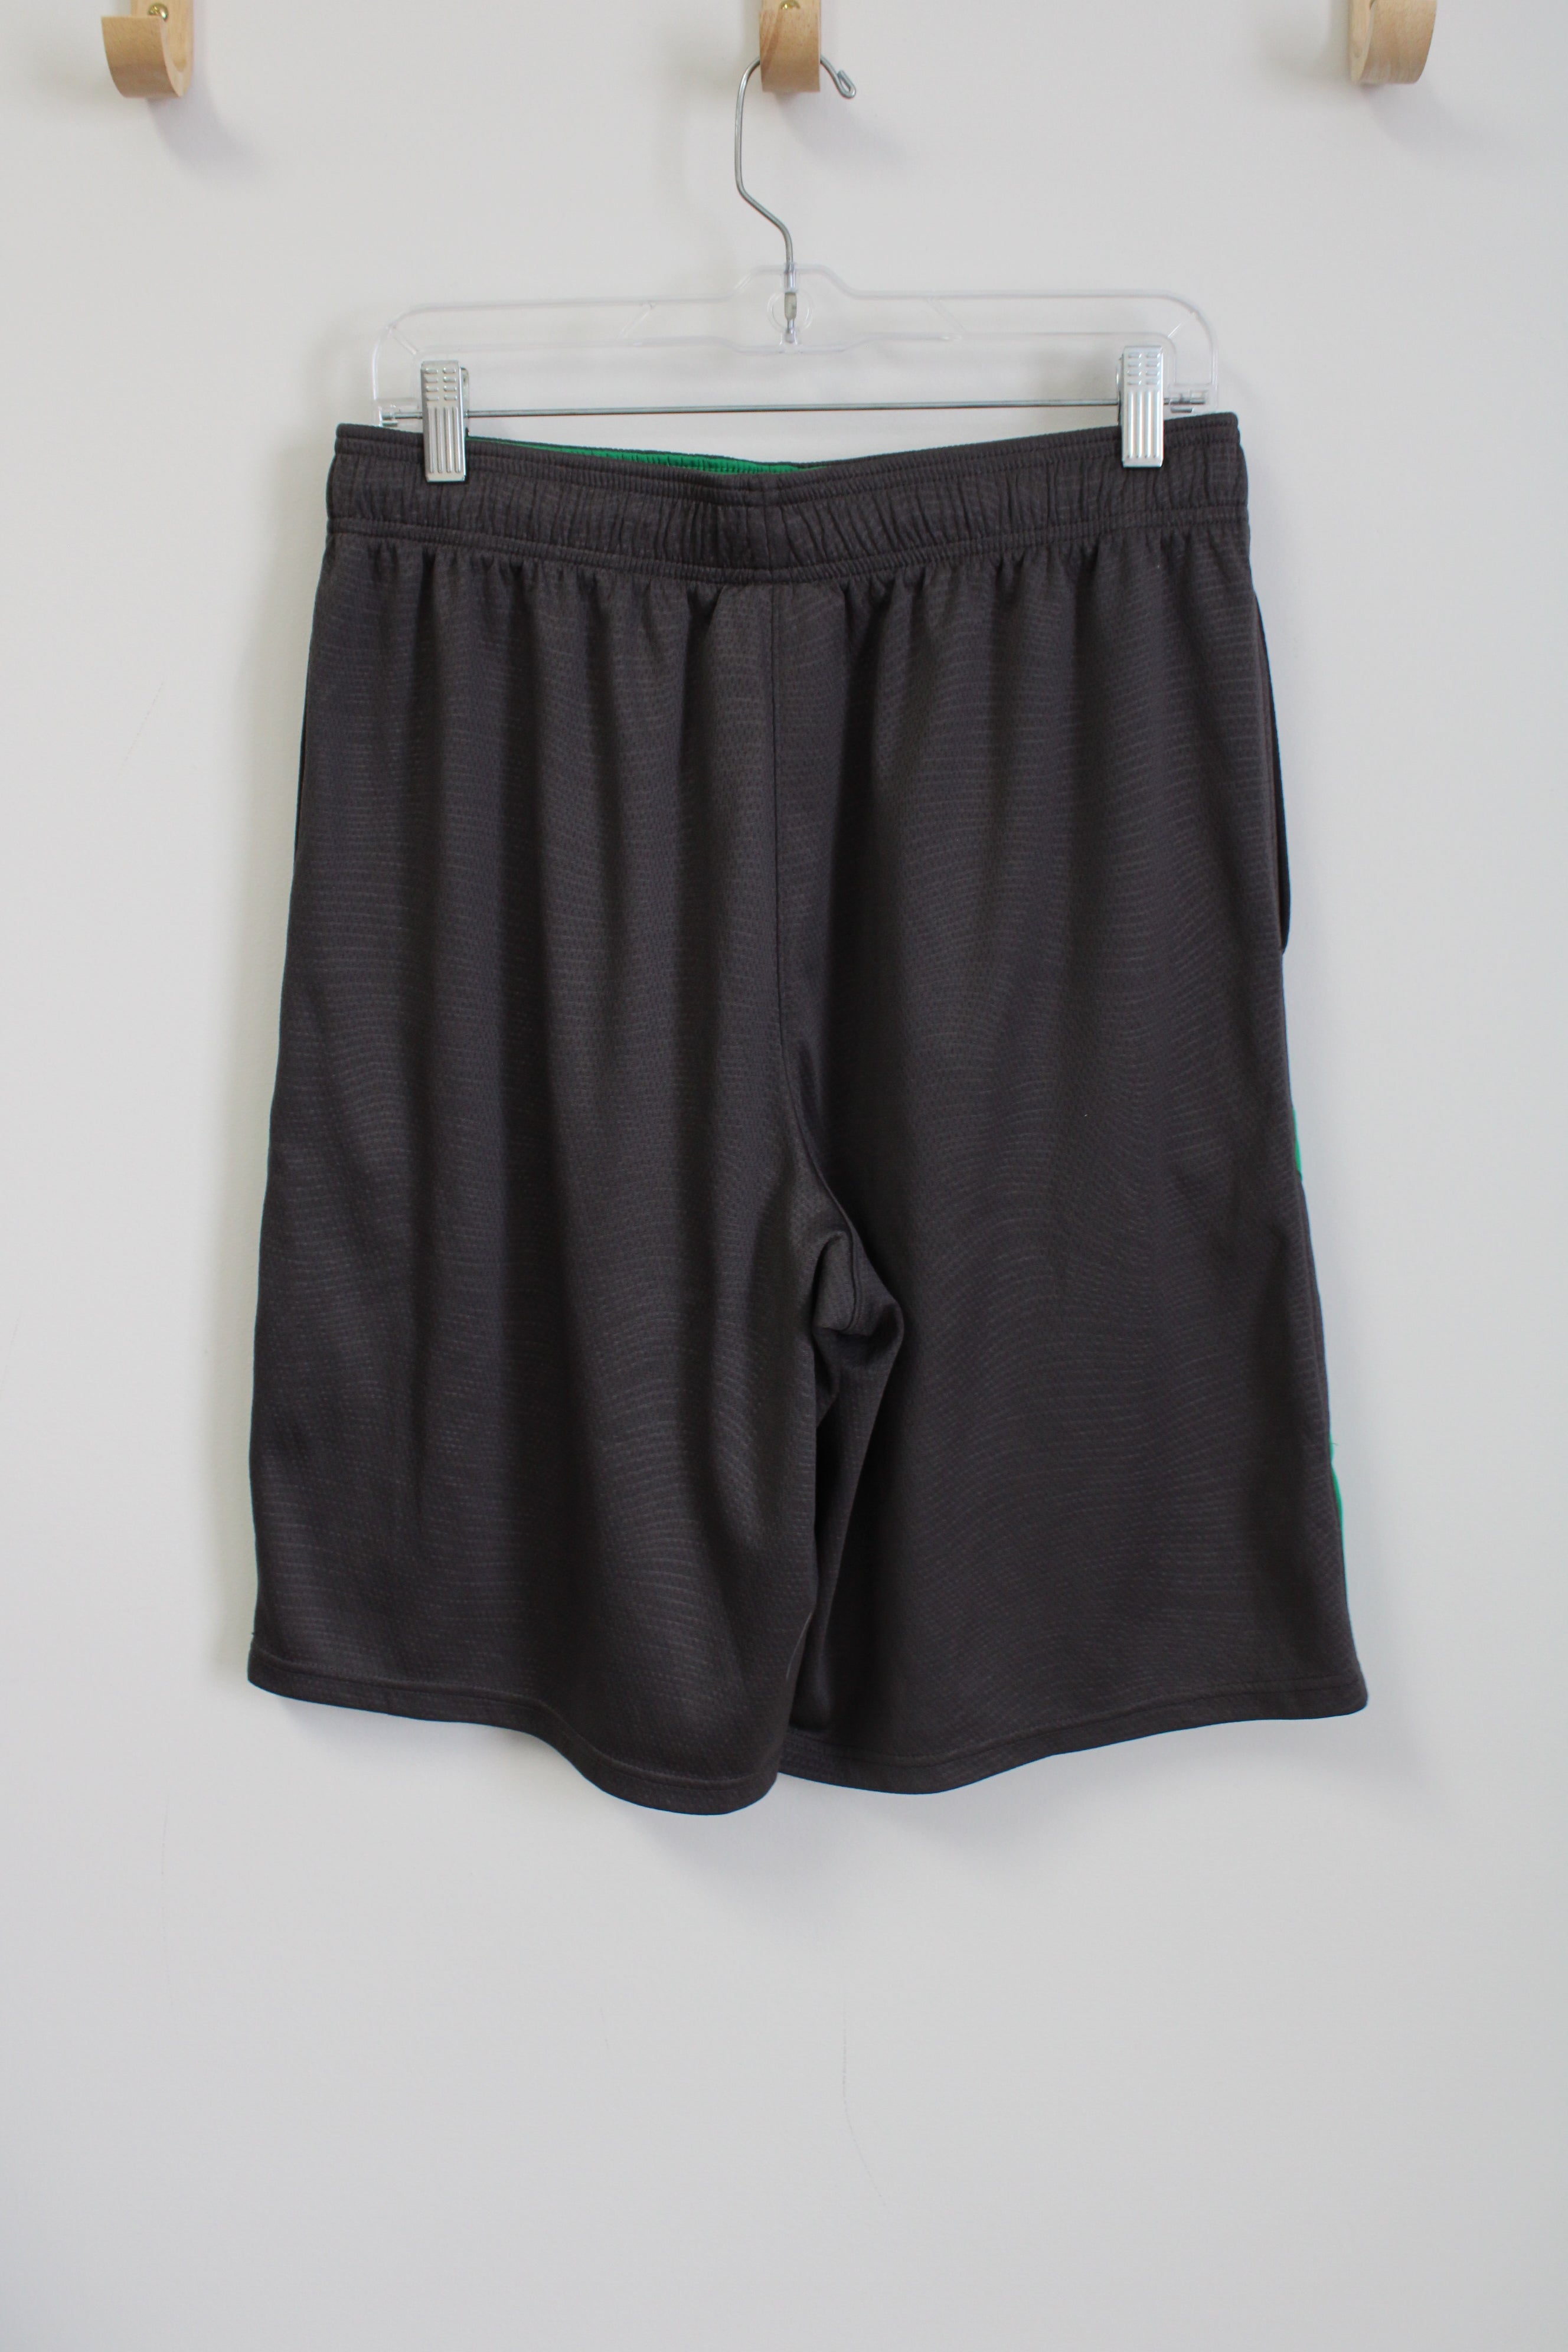 Athletec Gray Green Shorts | M